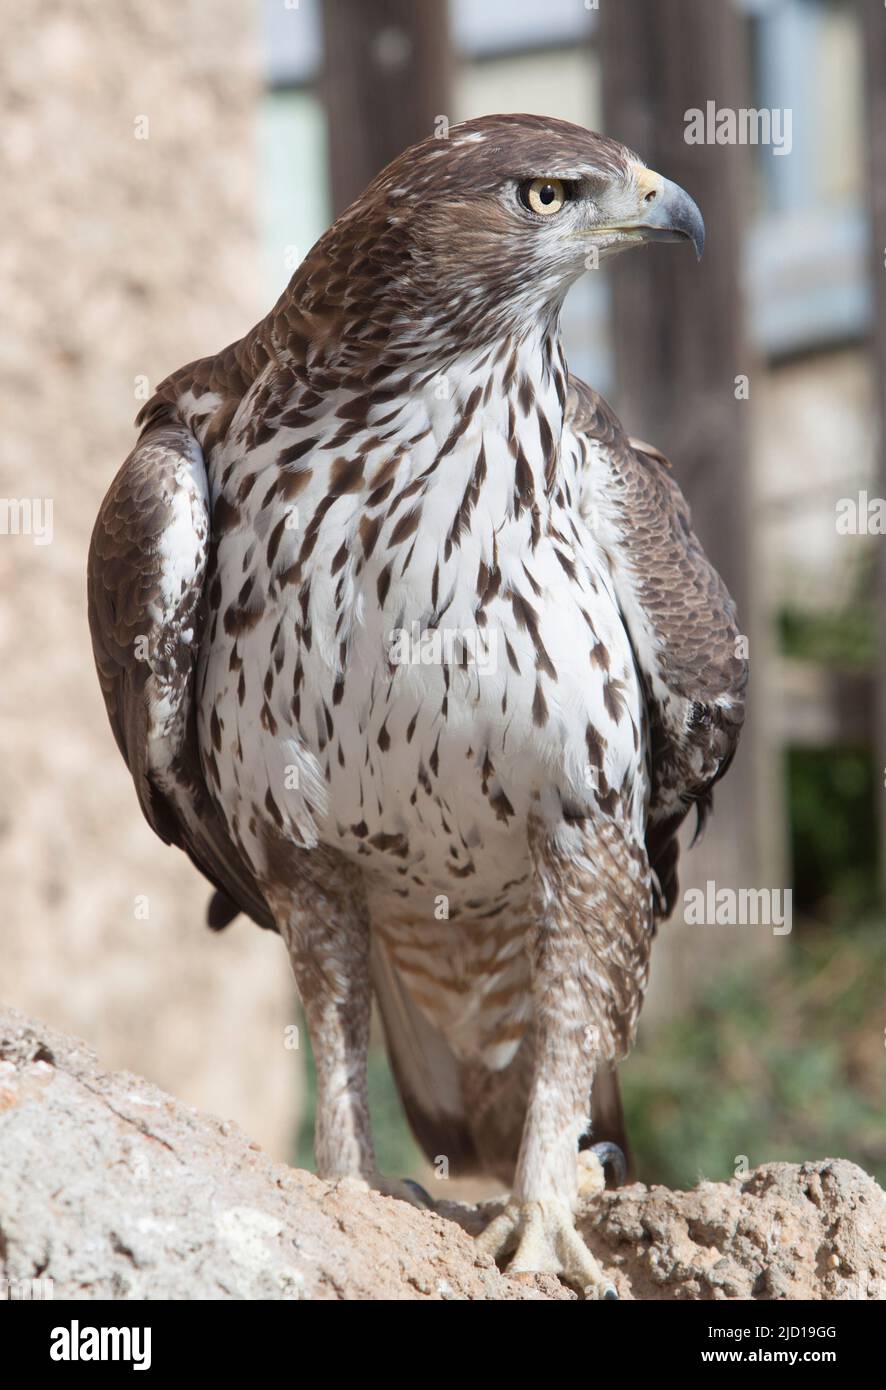 Bonellis Adler oder Aquila fasciata auf einem Felshang. Hochformat Stockfoto